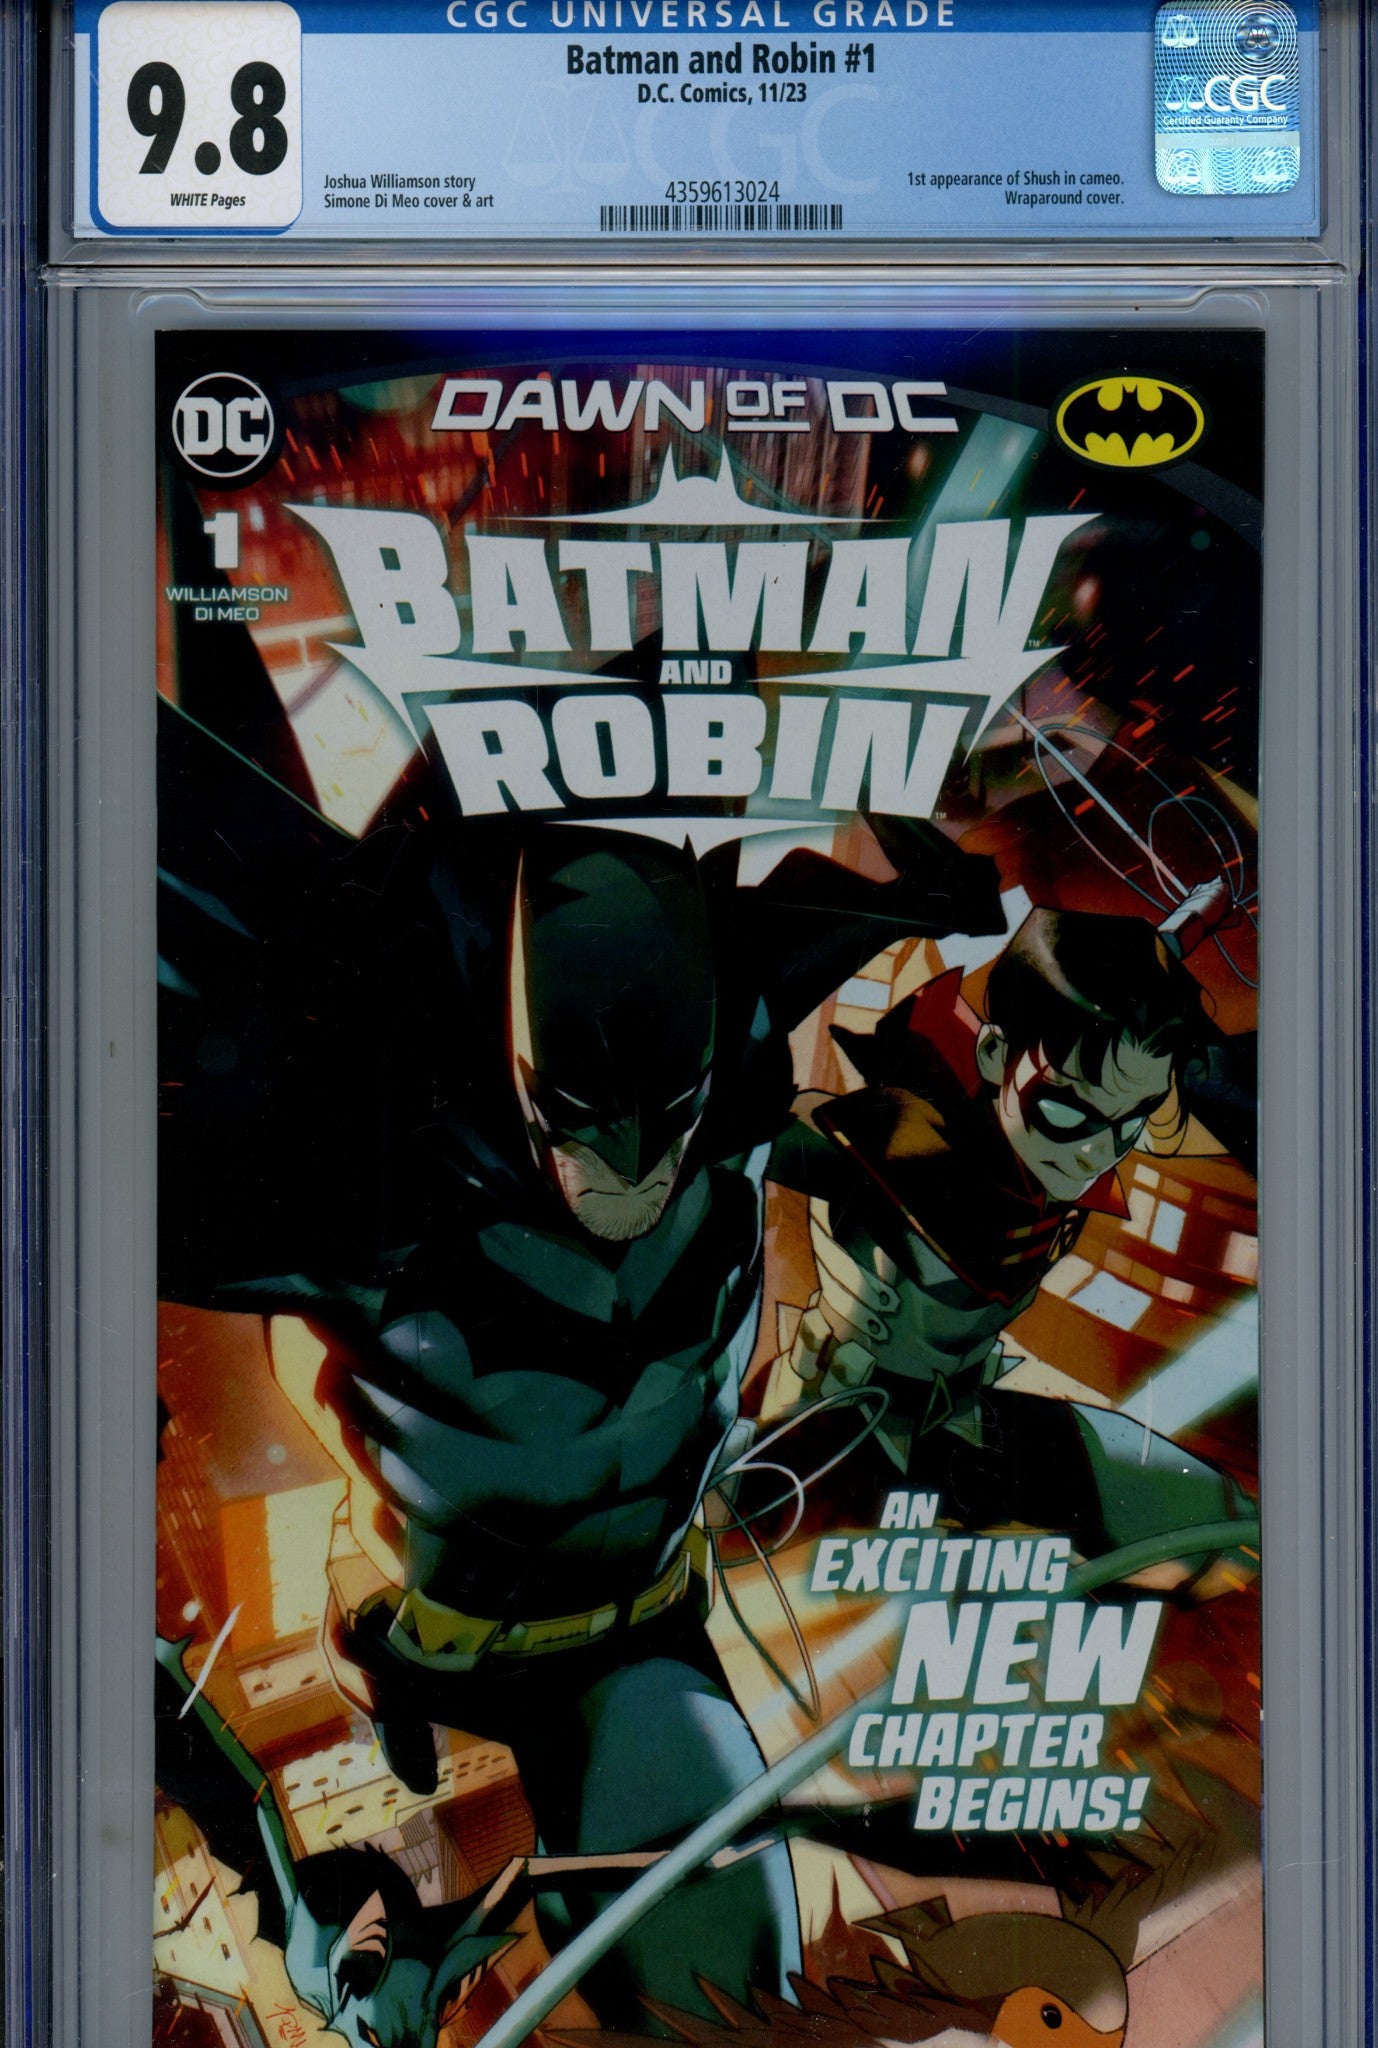 Batman and Robin Vol 3 1 CGC 9.8 (NM/M) (2023) 